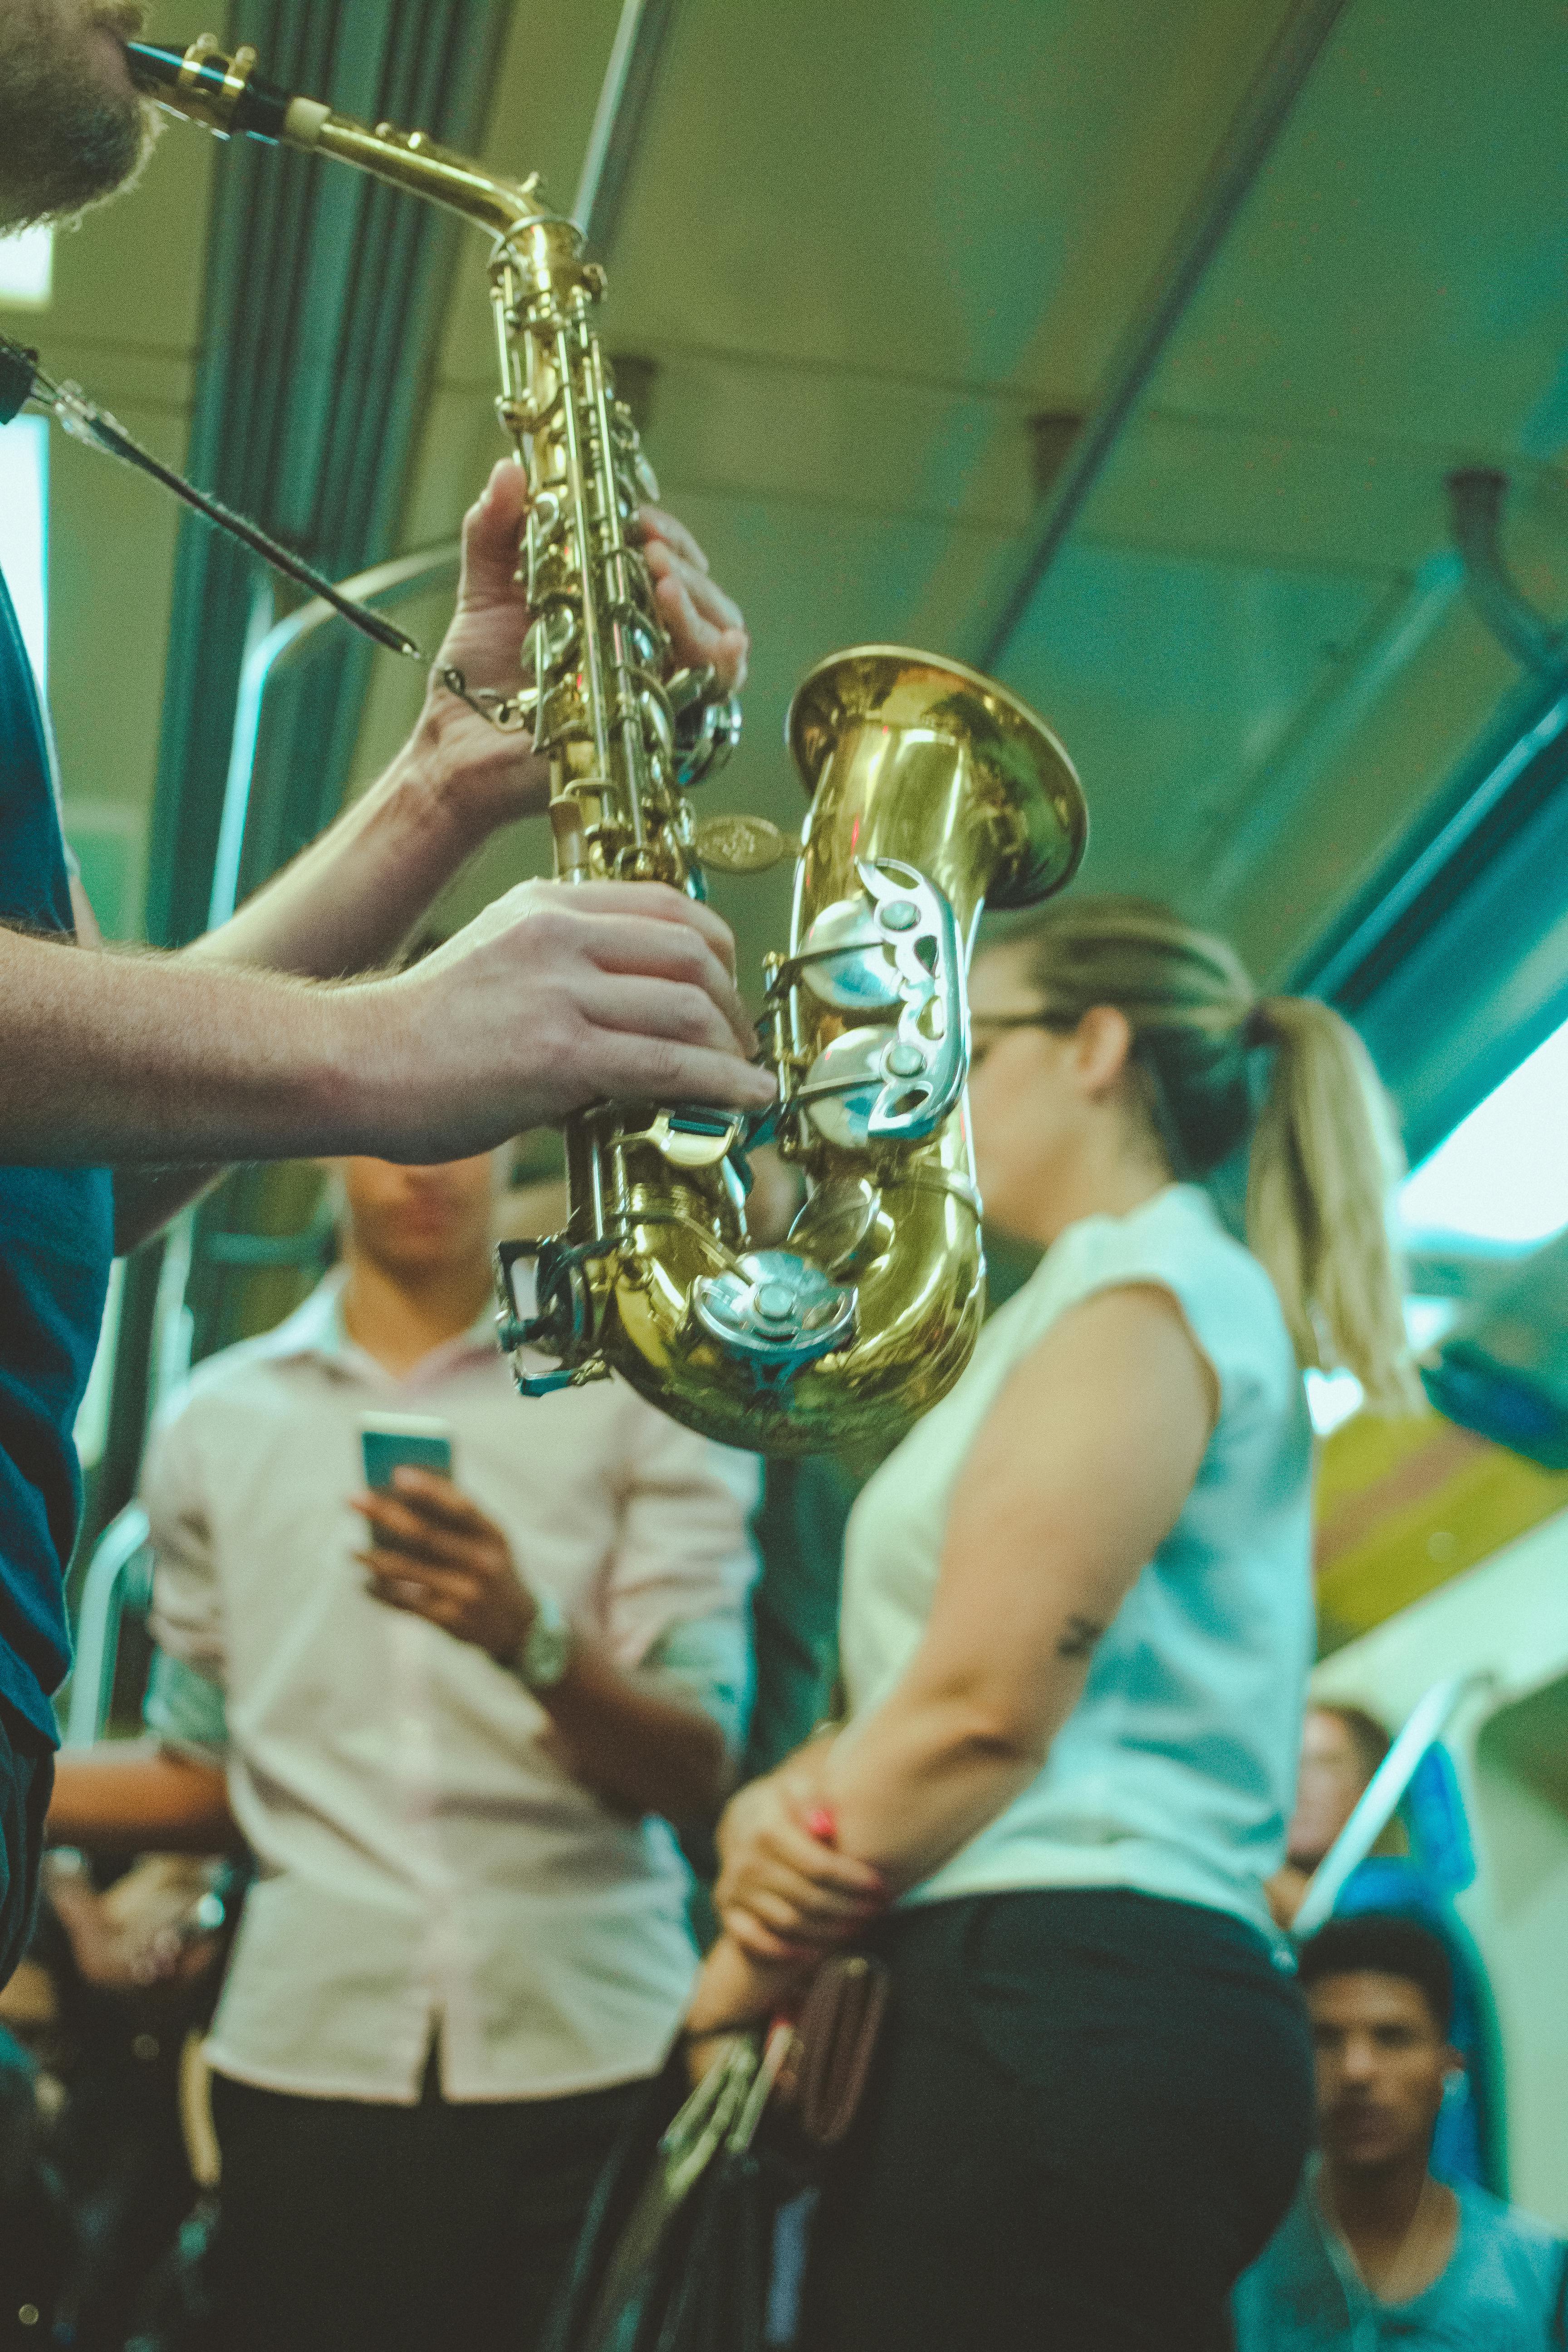 crop man playing saxophone in train